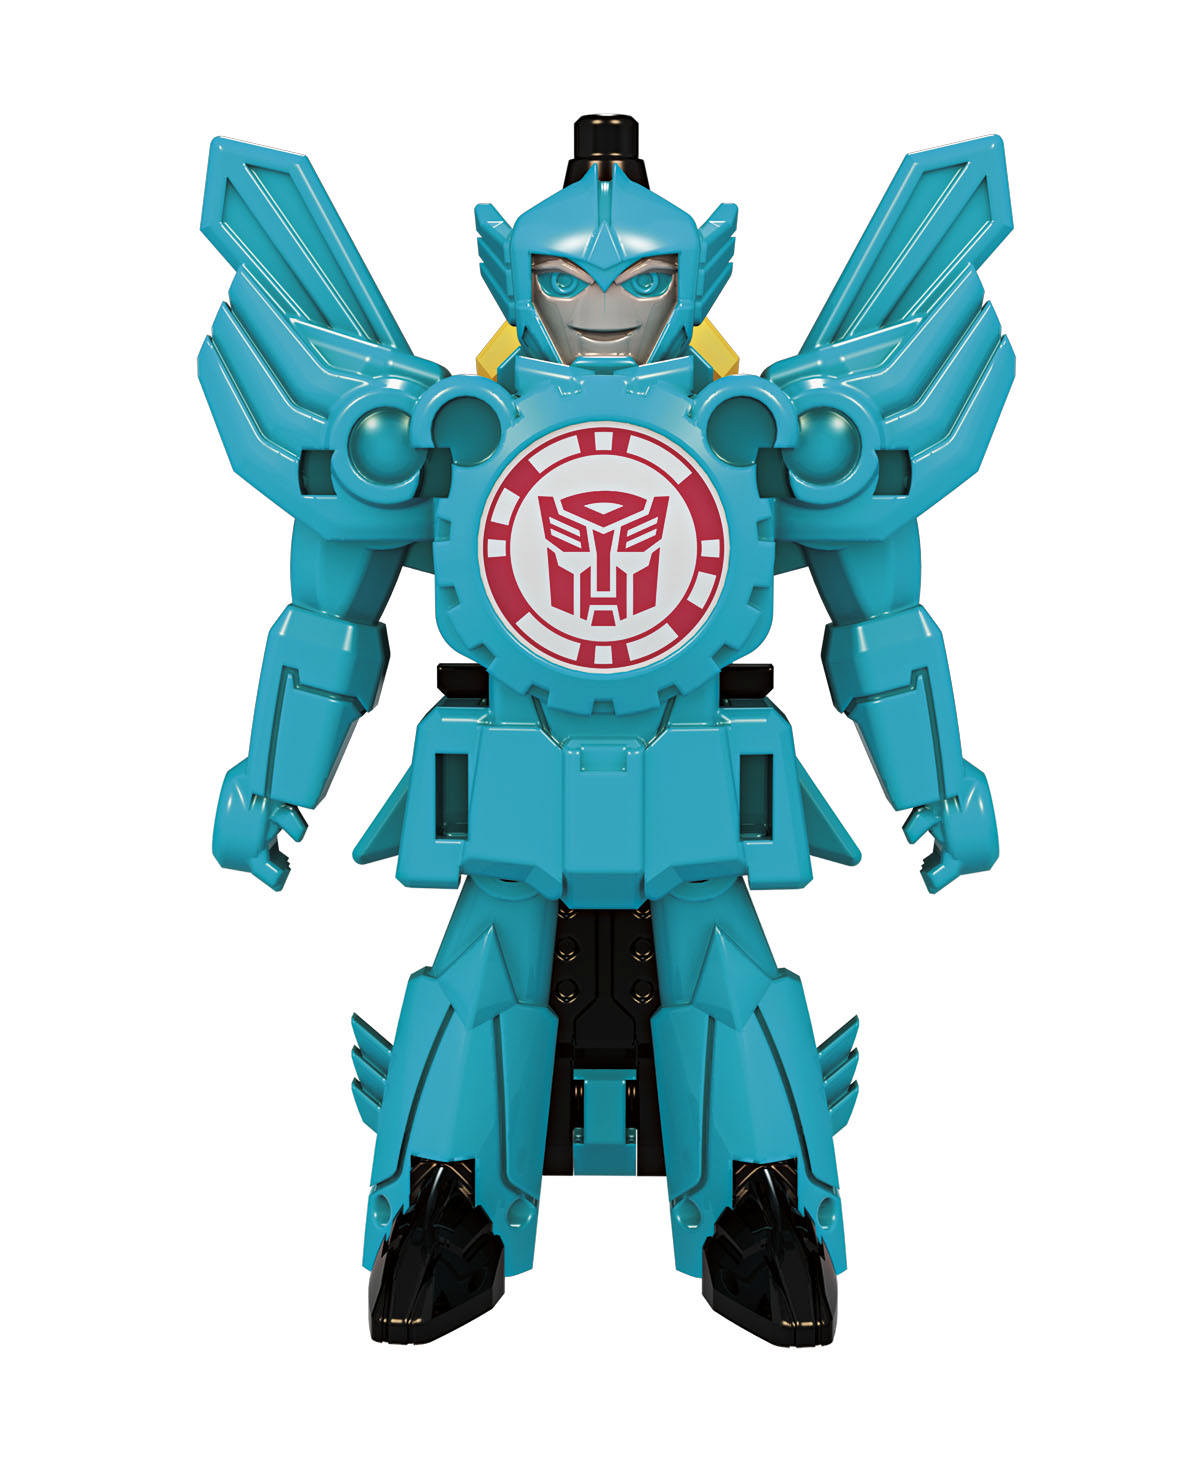 Код transformers. Трансформеры Hasbro Combiner Force. Transformers Robots in Disguise Windstrike. Transformers Robots in Disguise Combiner Force игрушки. Transformers Robots in Disguise игрушки Hasbro.